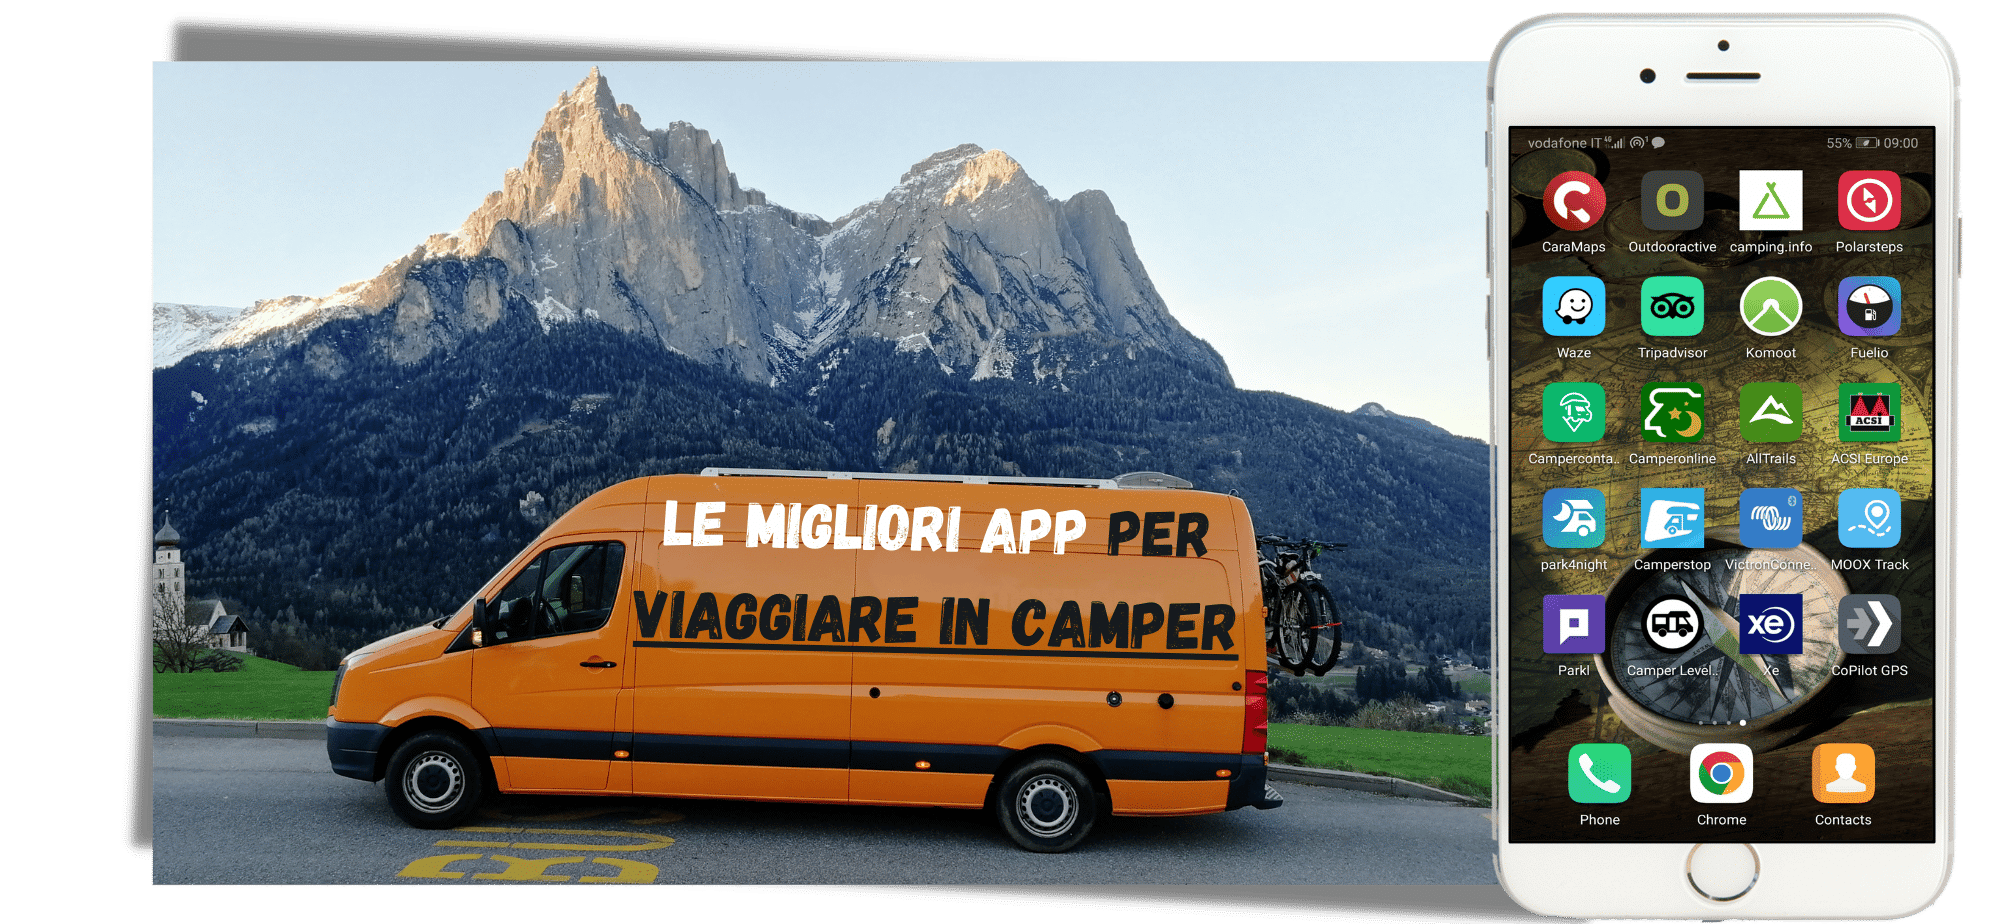 Migliori app viaggiare in camper - vanlife - van